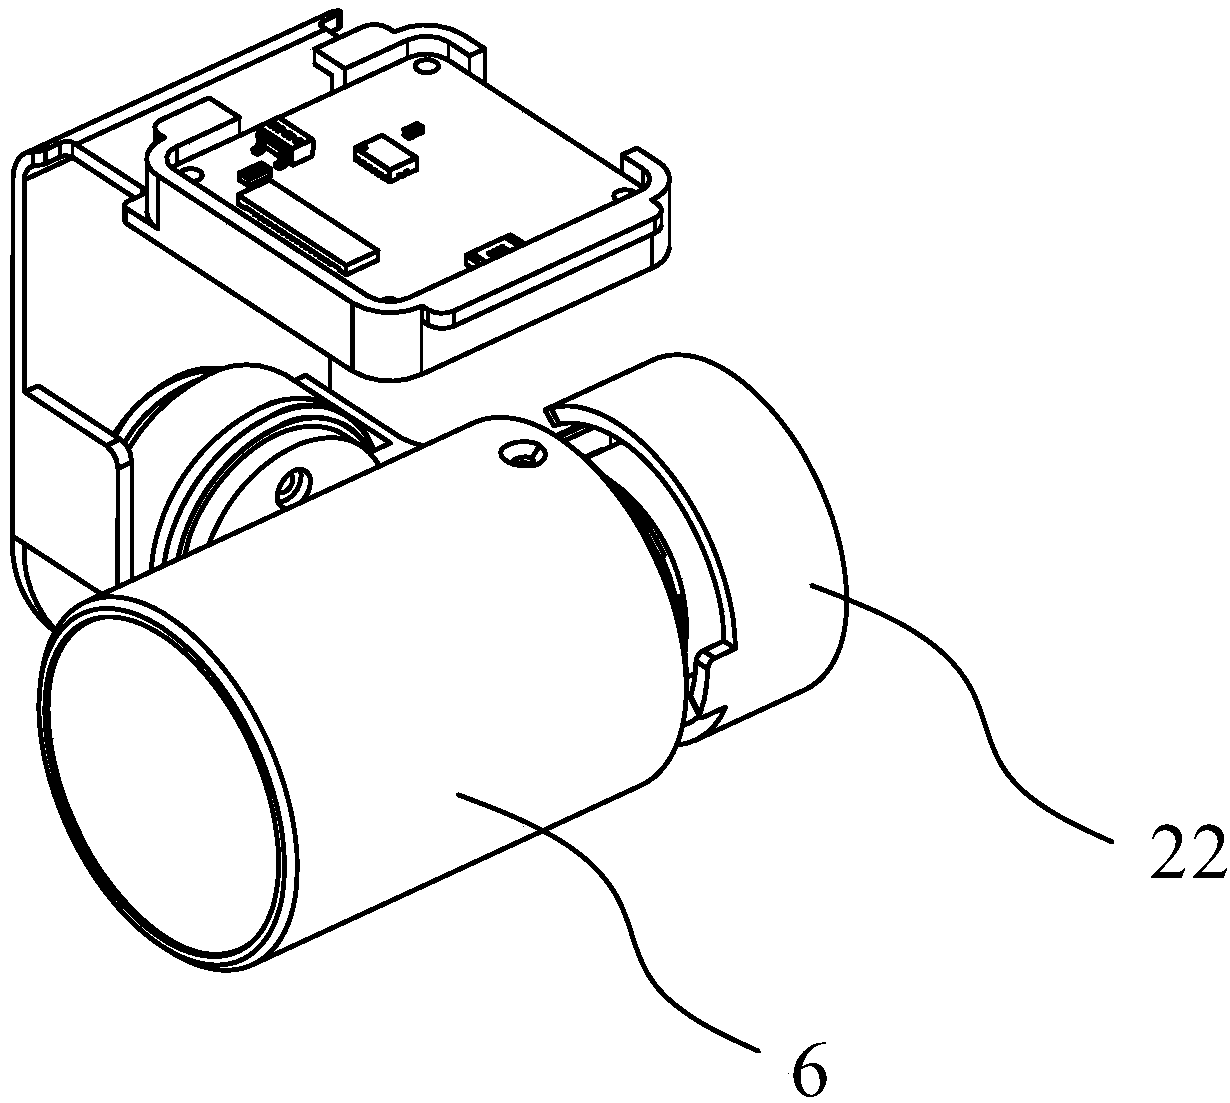 Three-axis holder